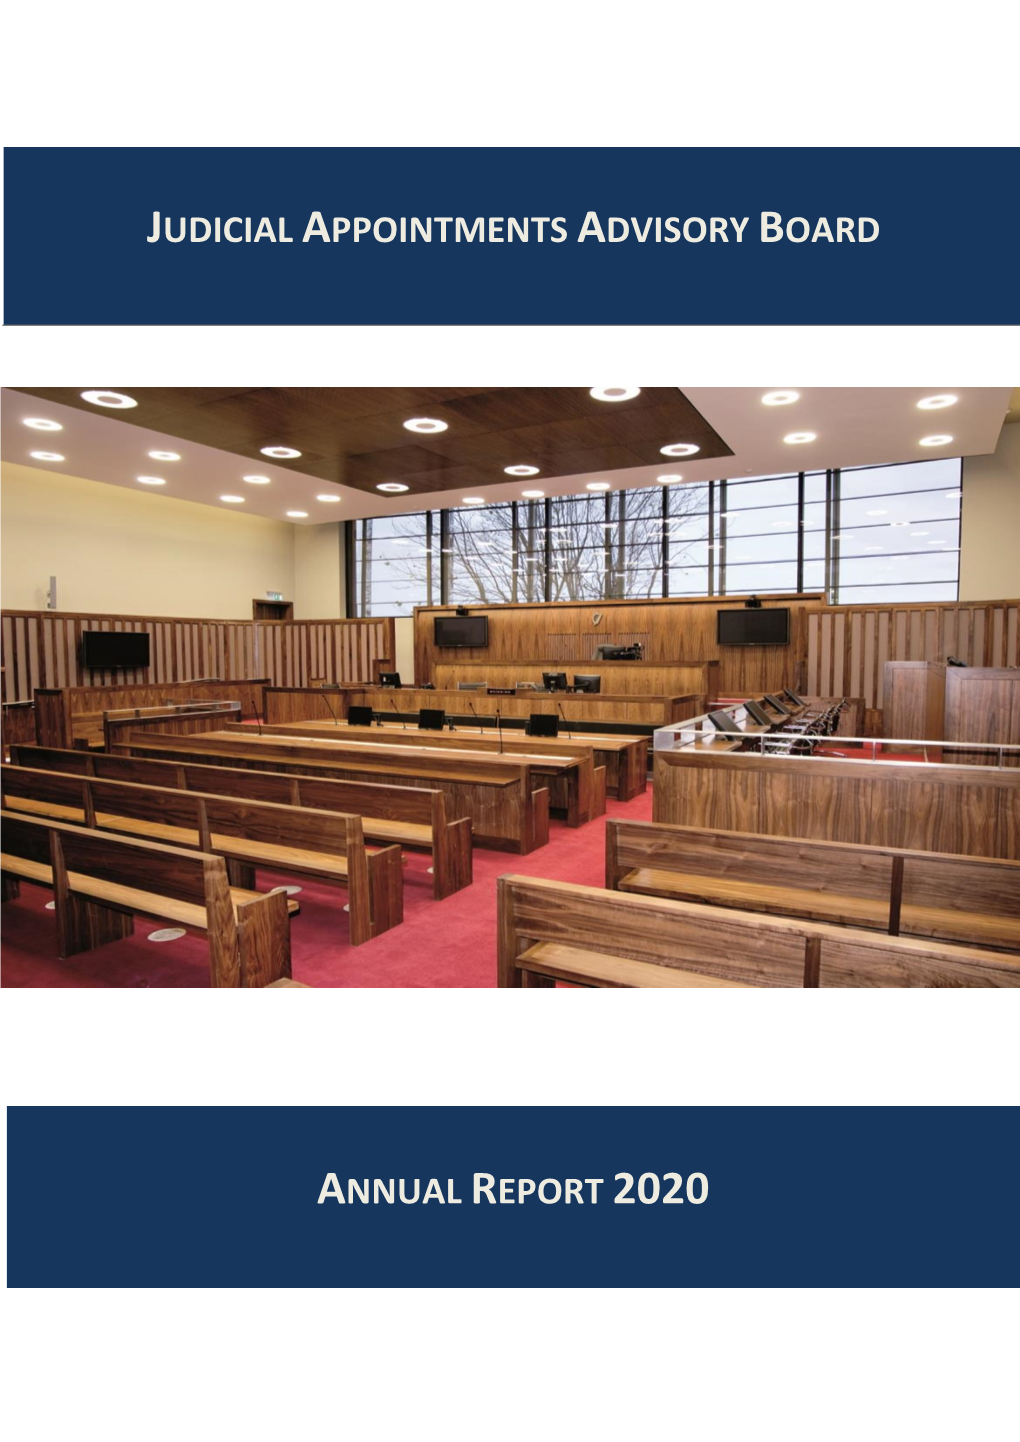 JAAB Annual Report 2020